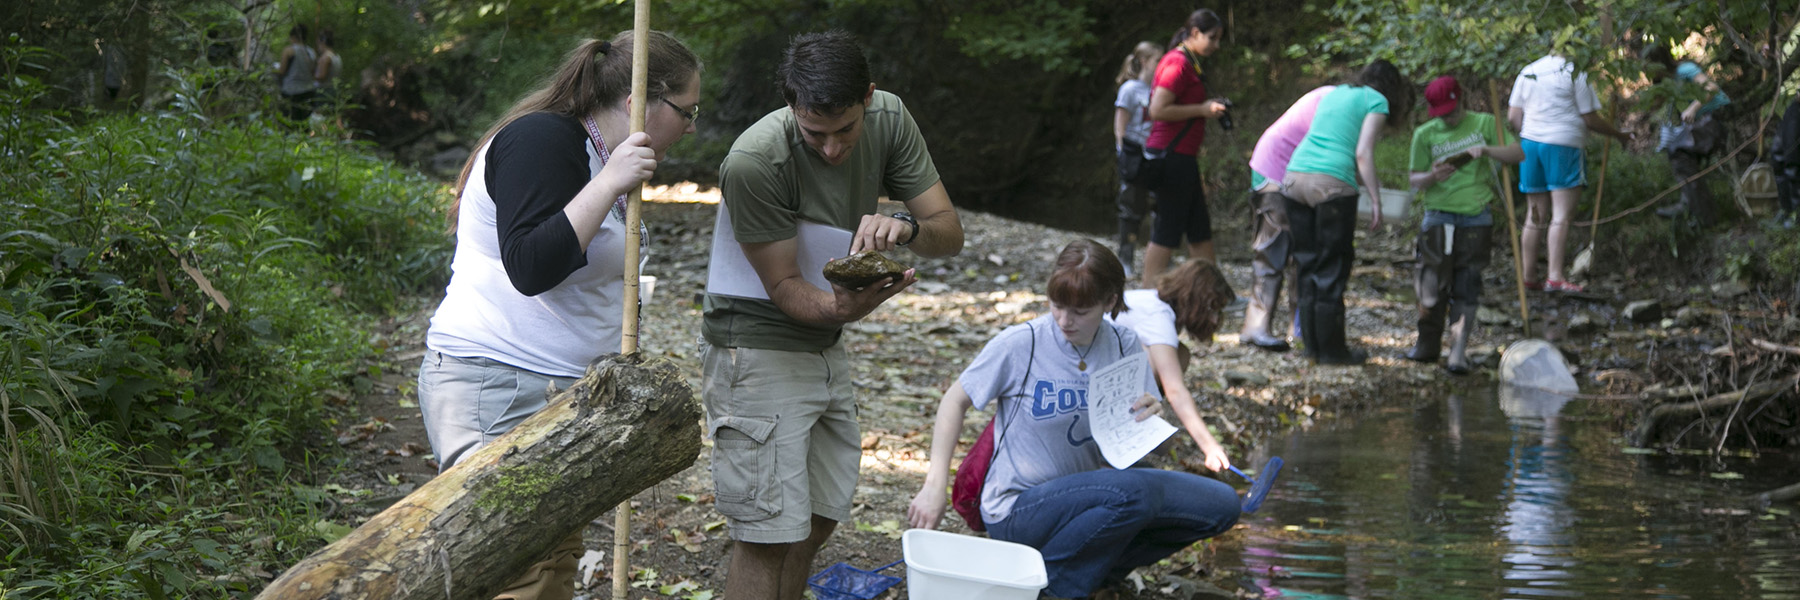 Two Citizen Scientists look under a rock for macroinvertebrates.